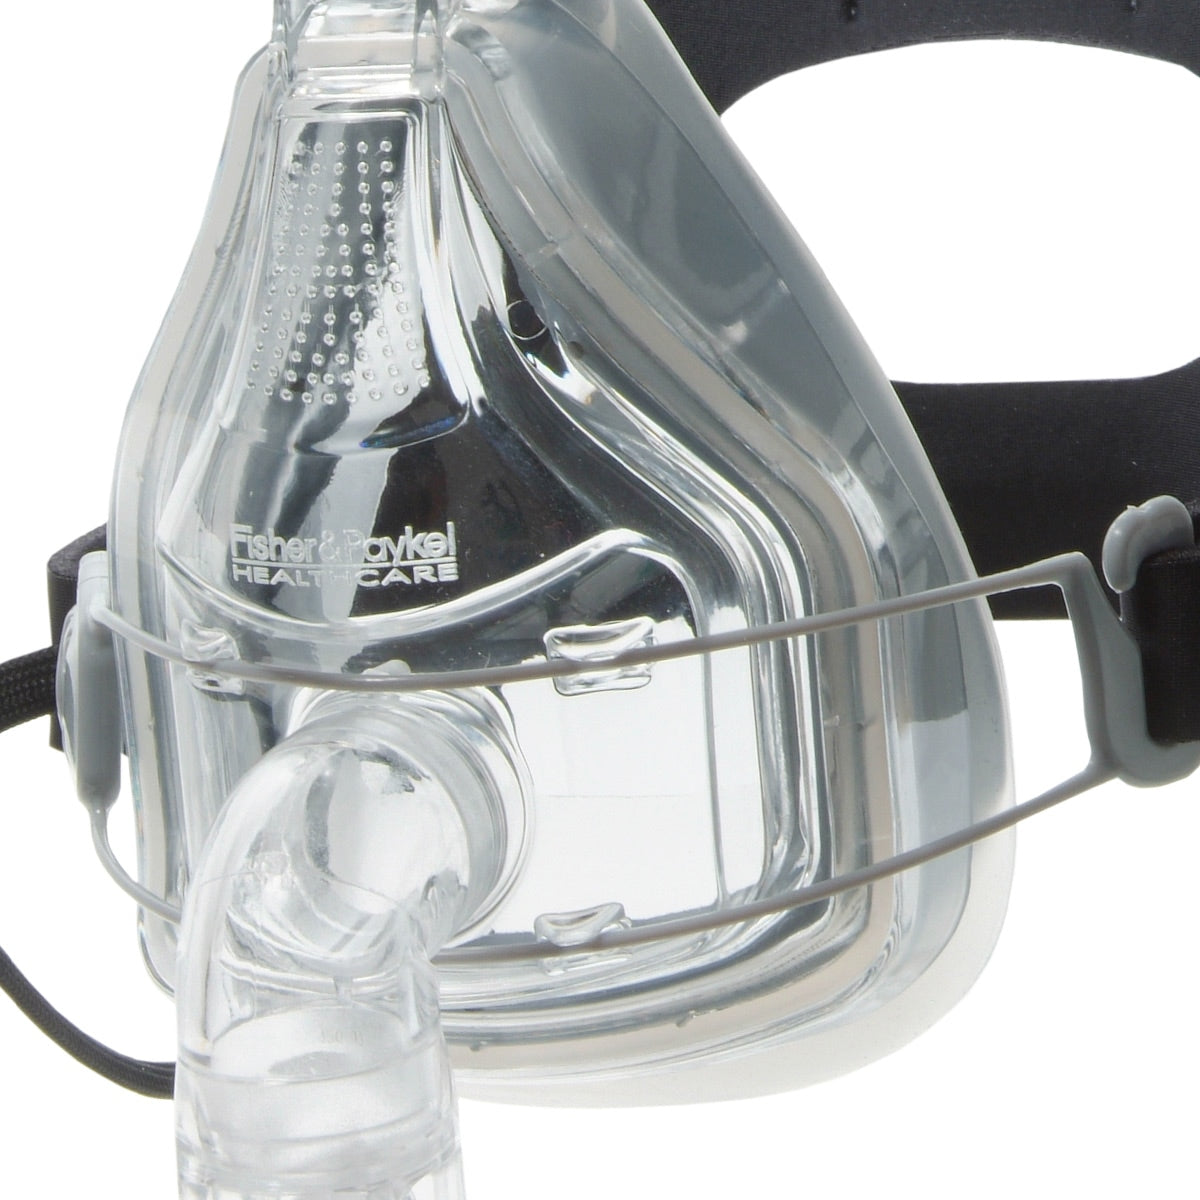 FlexiFit 432 Full Face CPAP/BiPAP Mask with Headgear